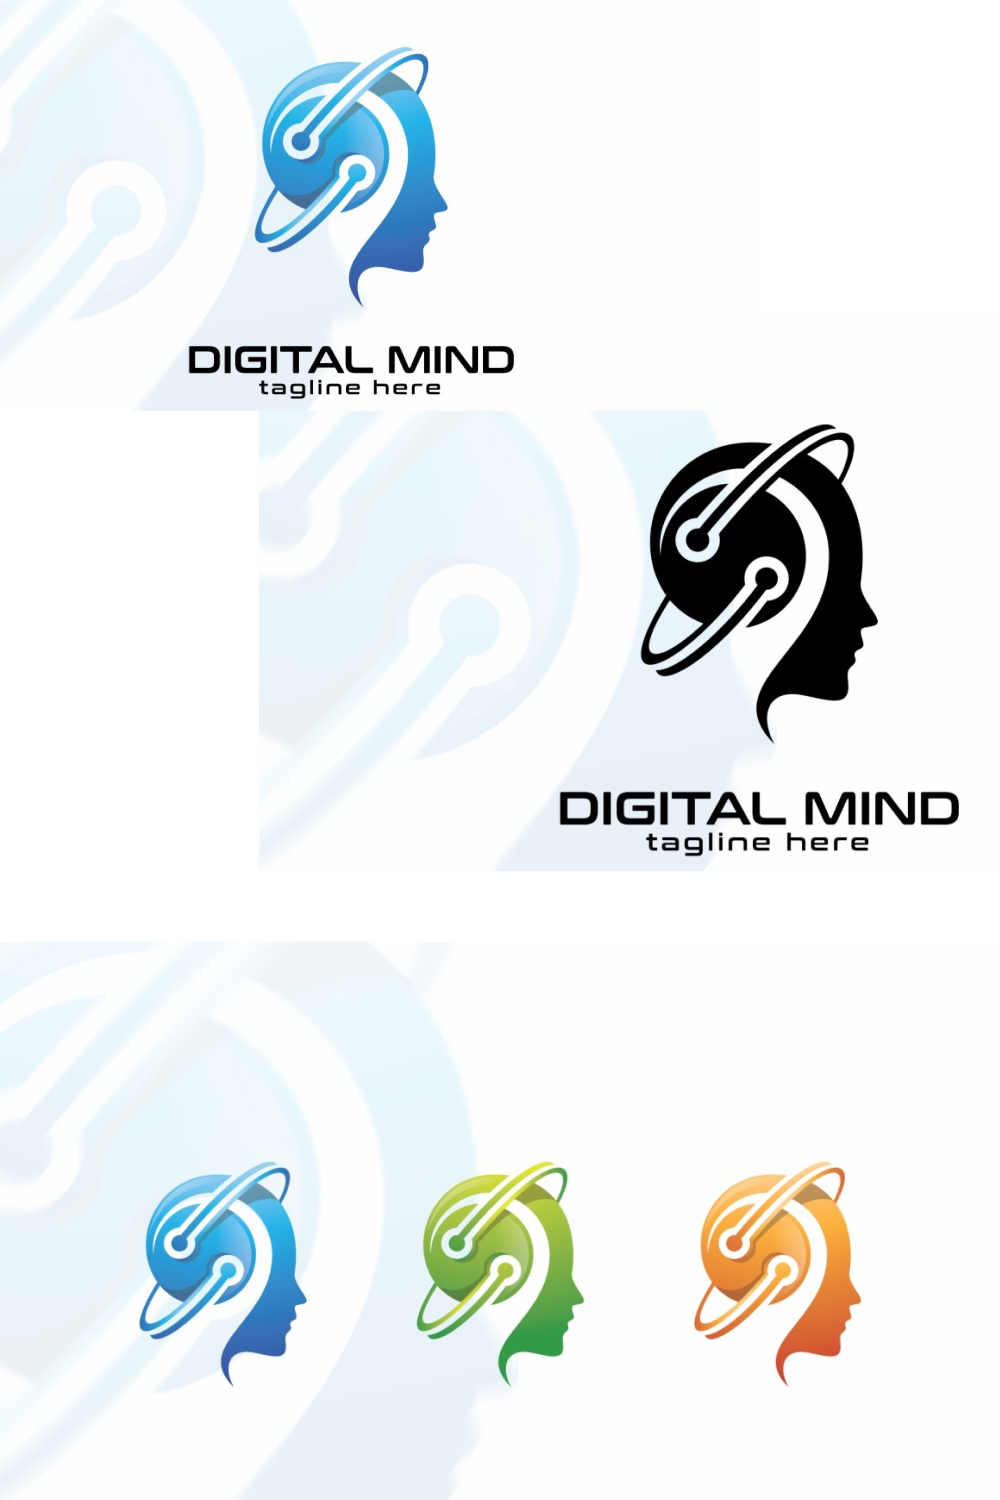 Digital mind logo template.